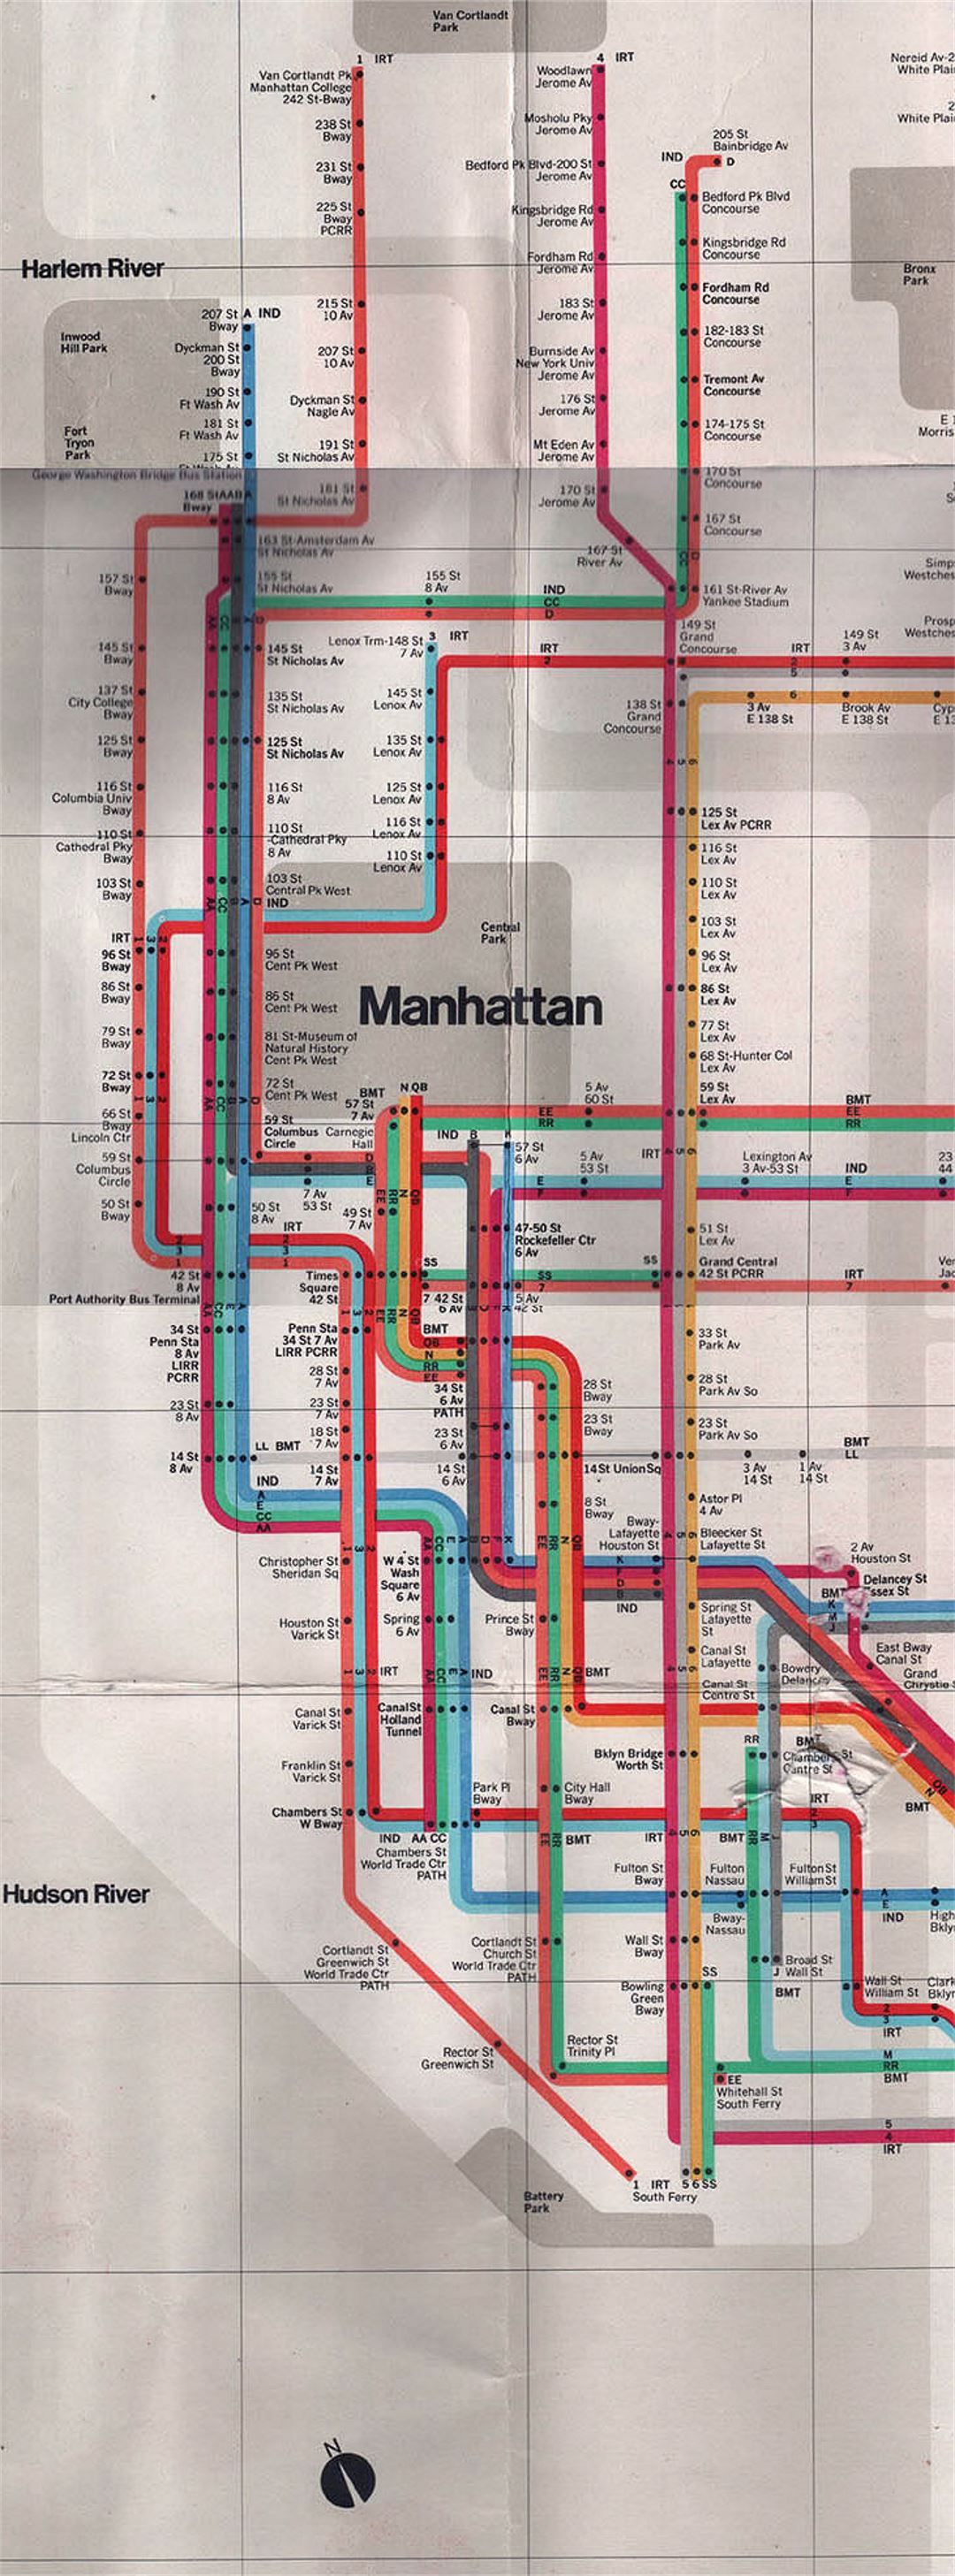 Subway map of Manhattan